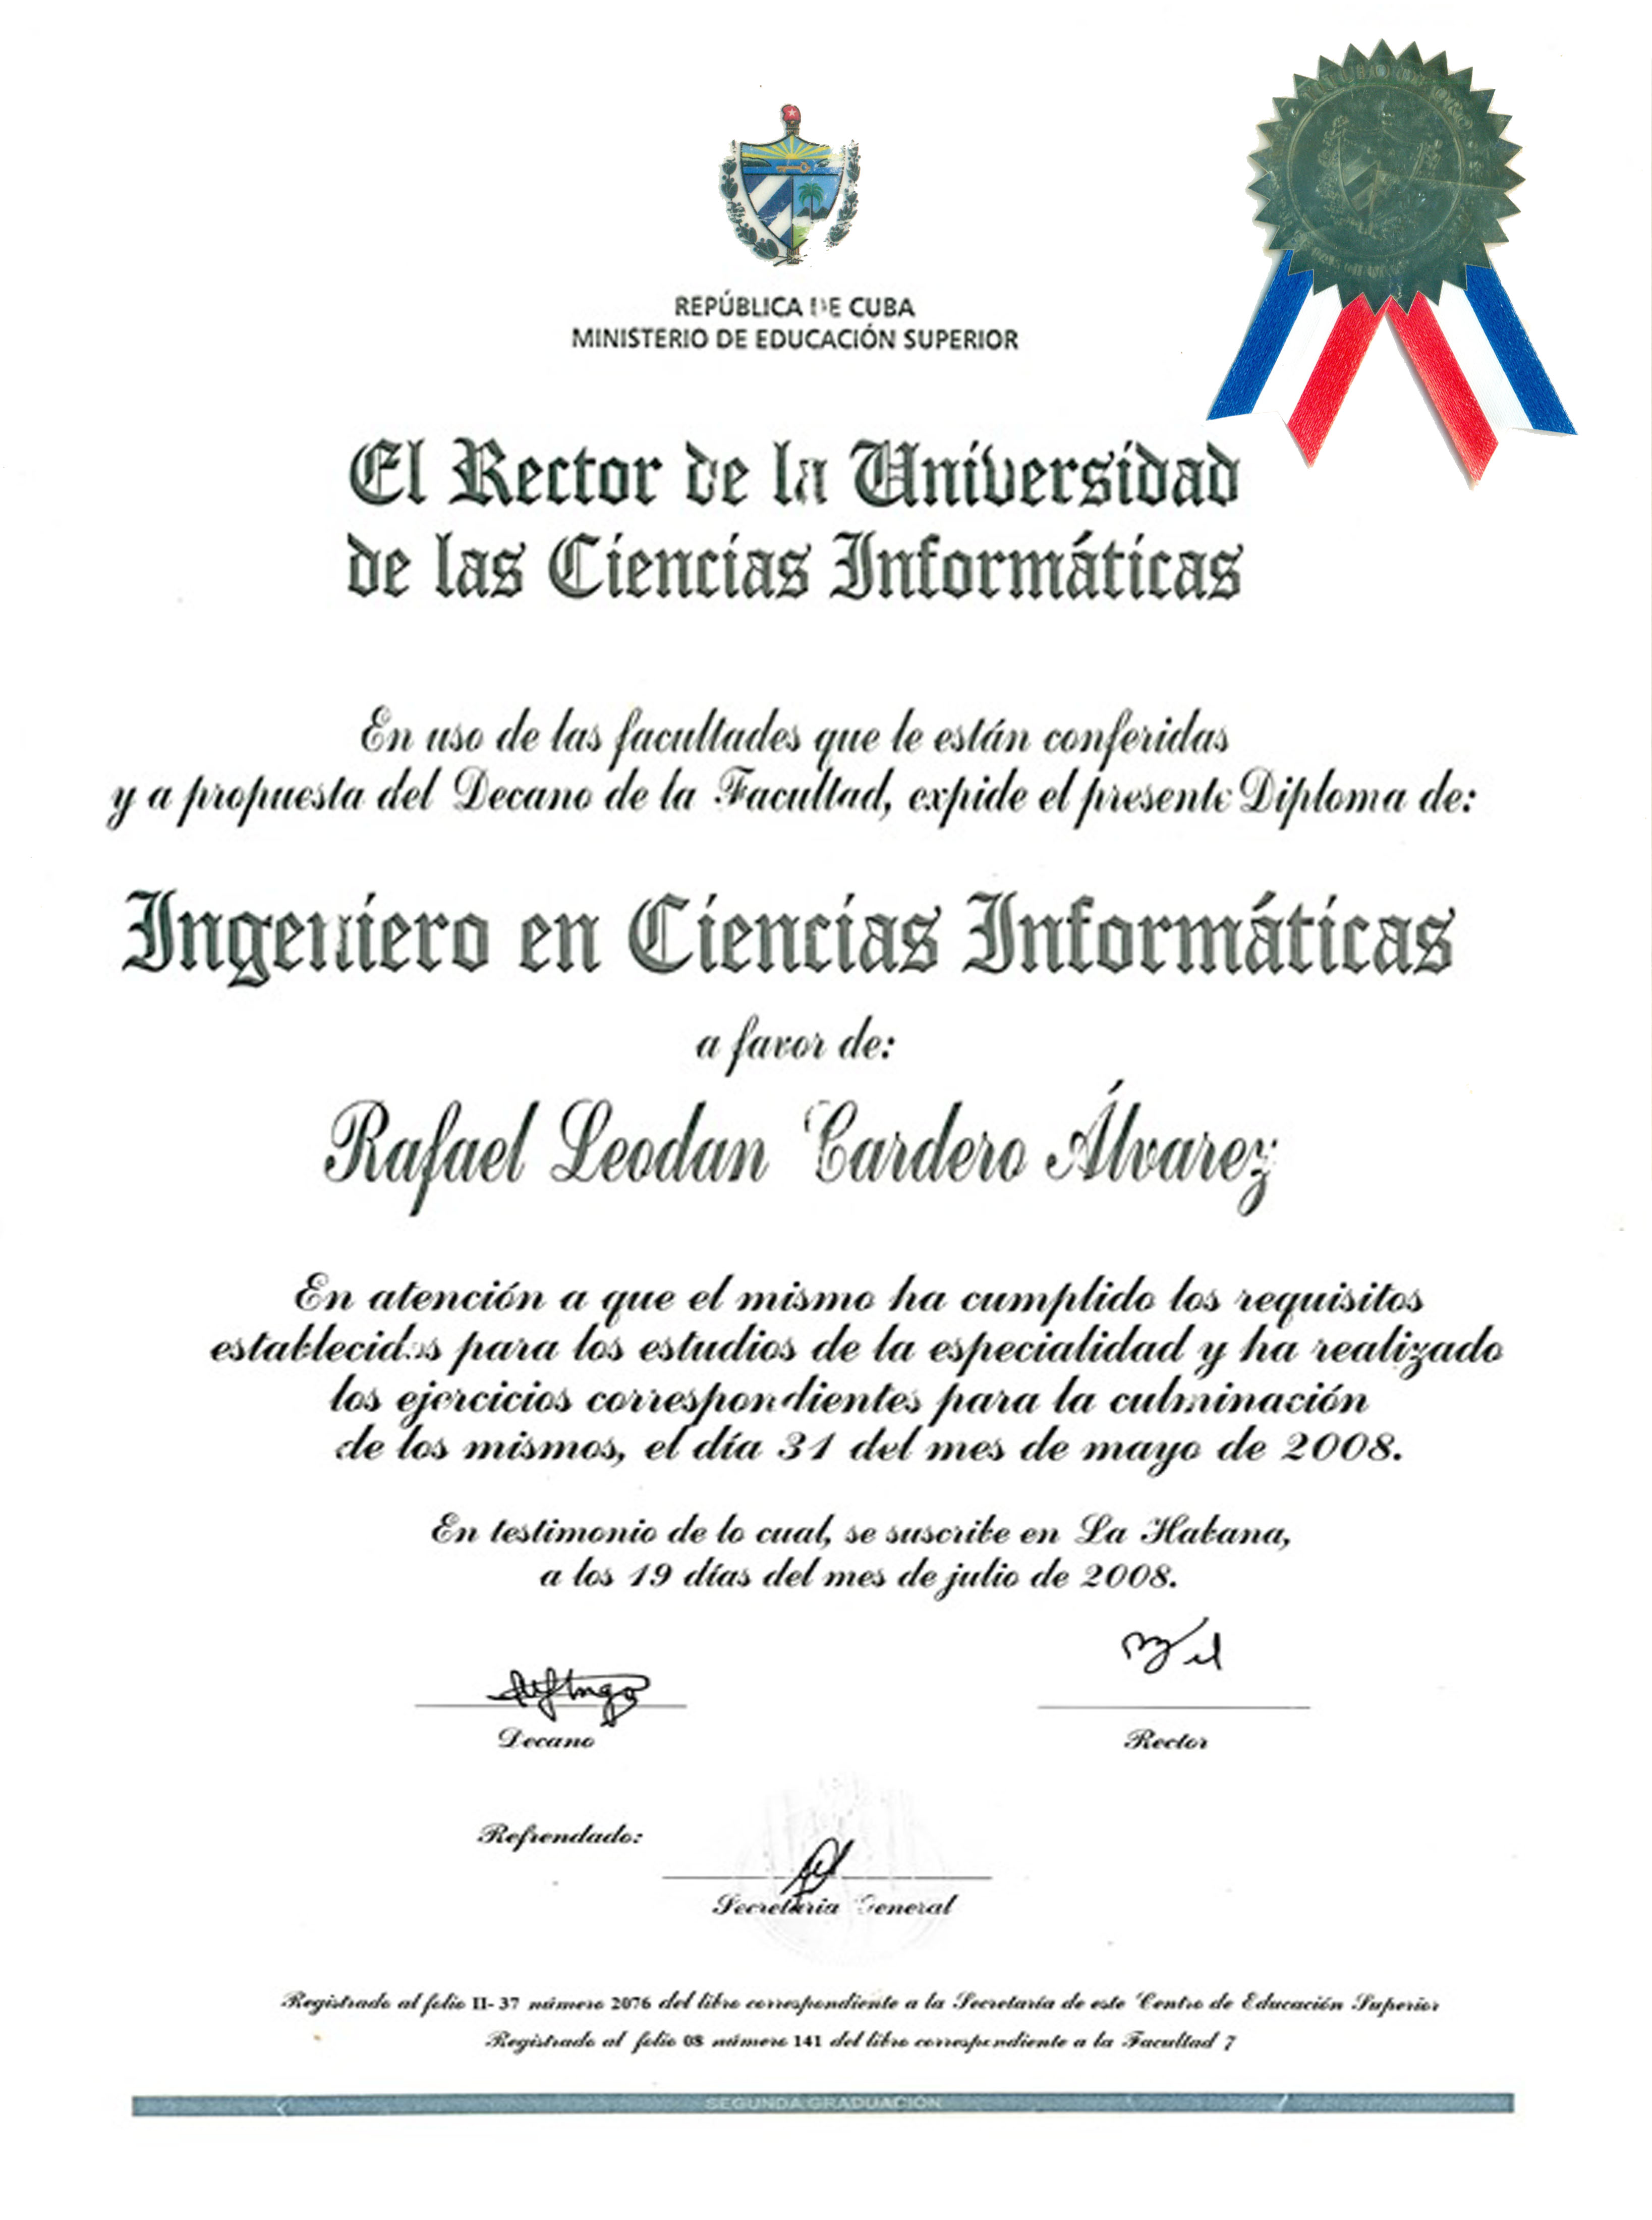 Certificate as Engineer in Informatics Sciences.